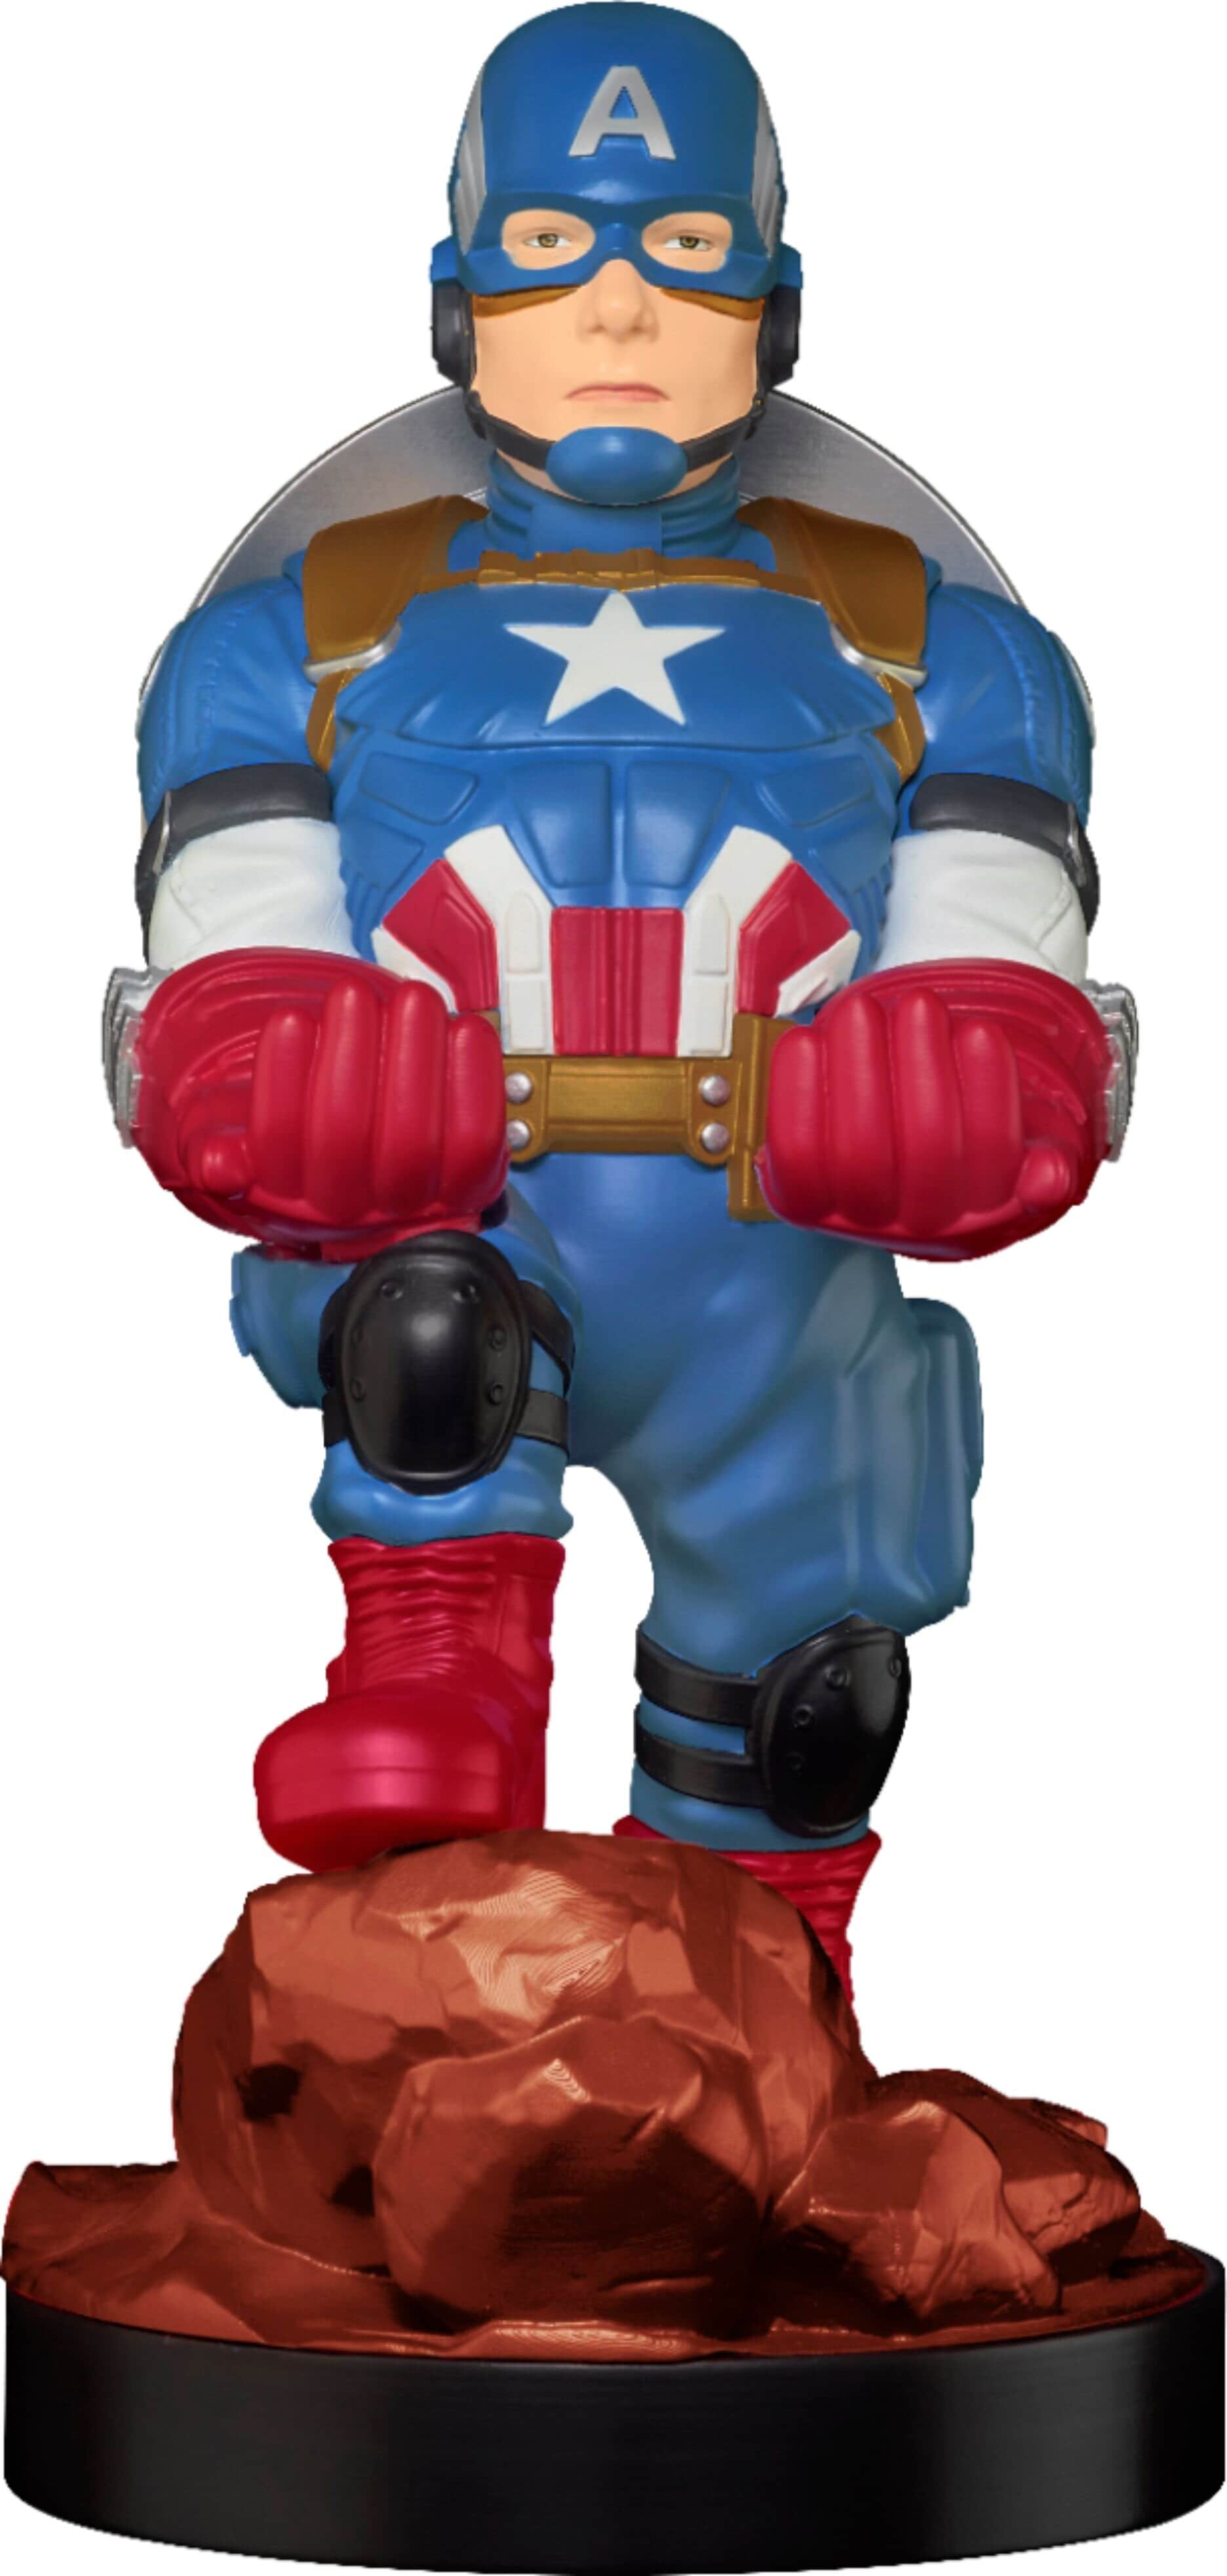 Marvel Avengers, Cable Guy Captain America